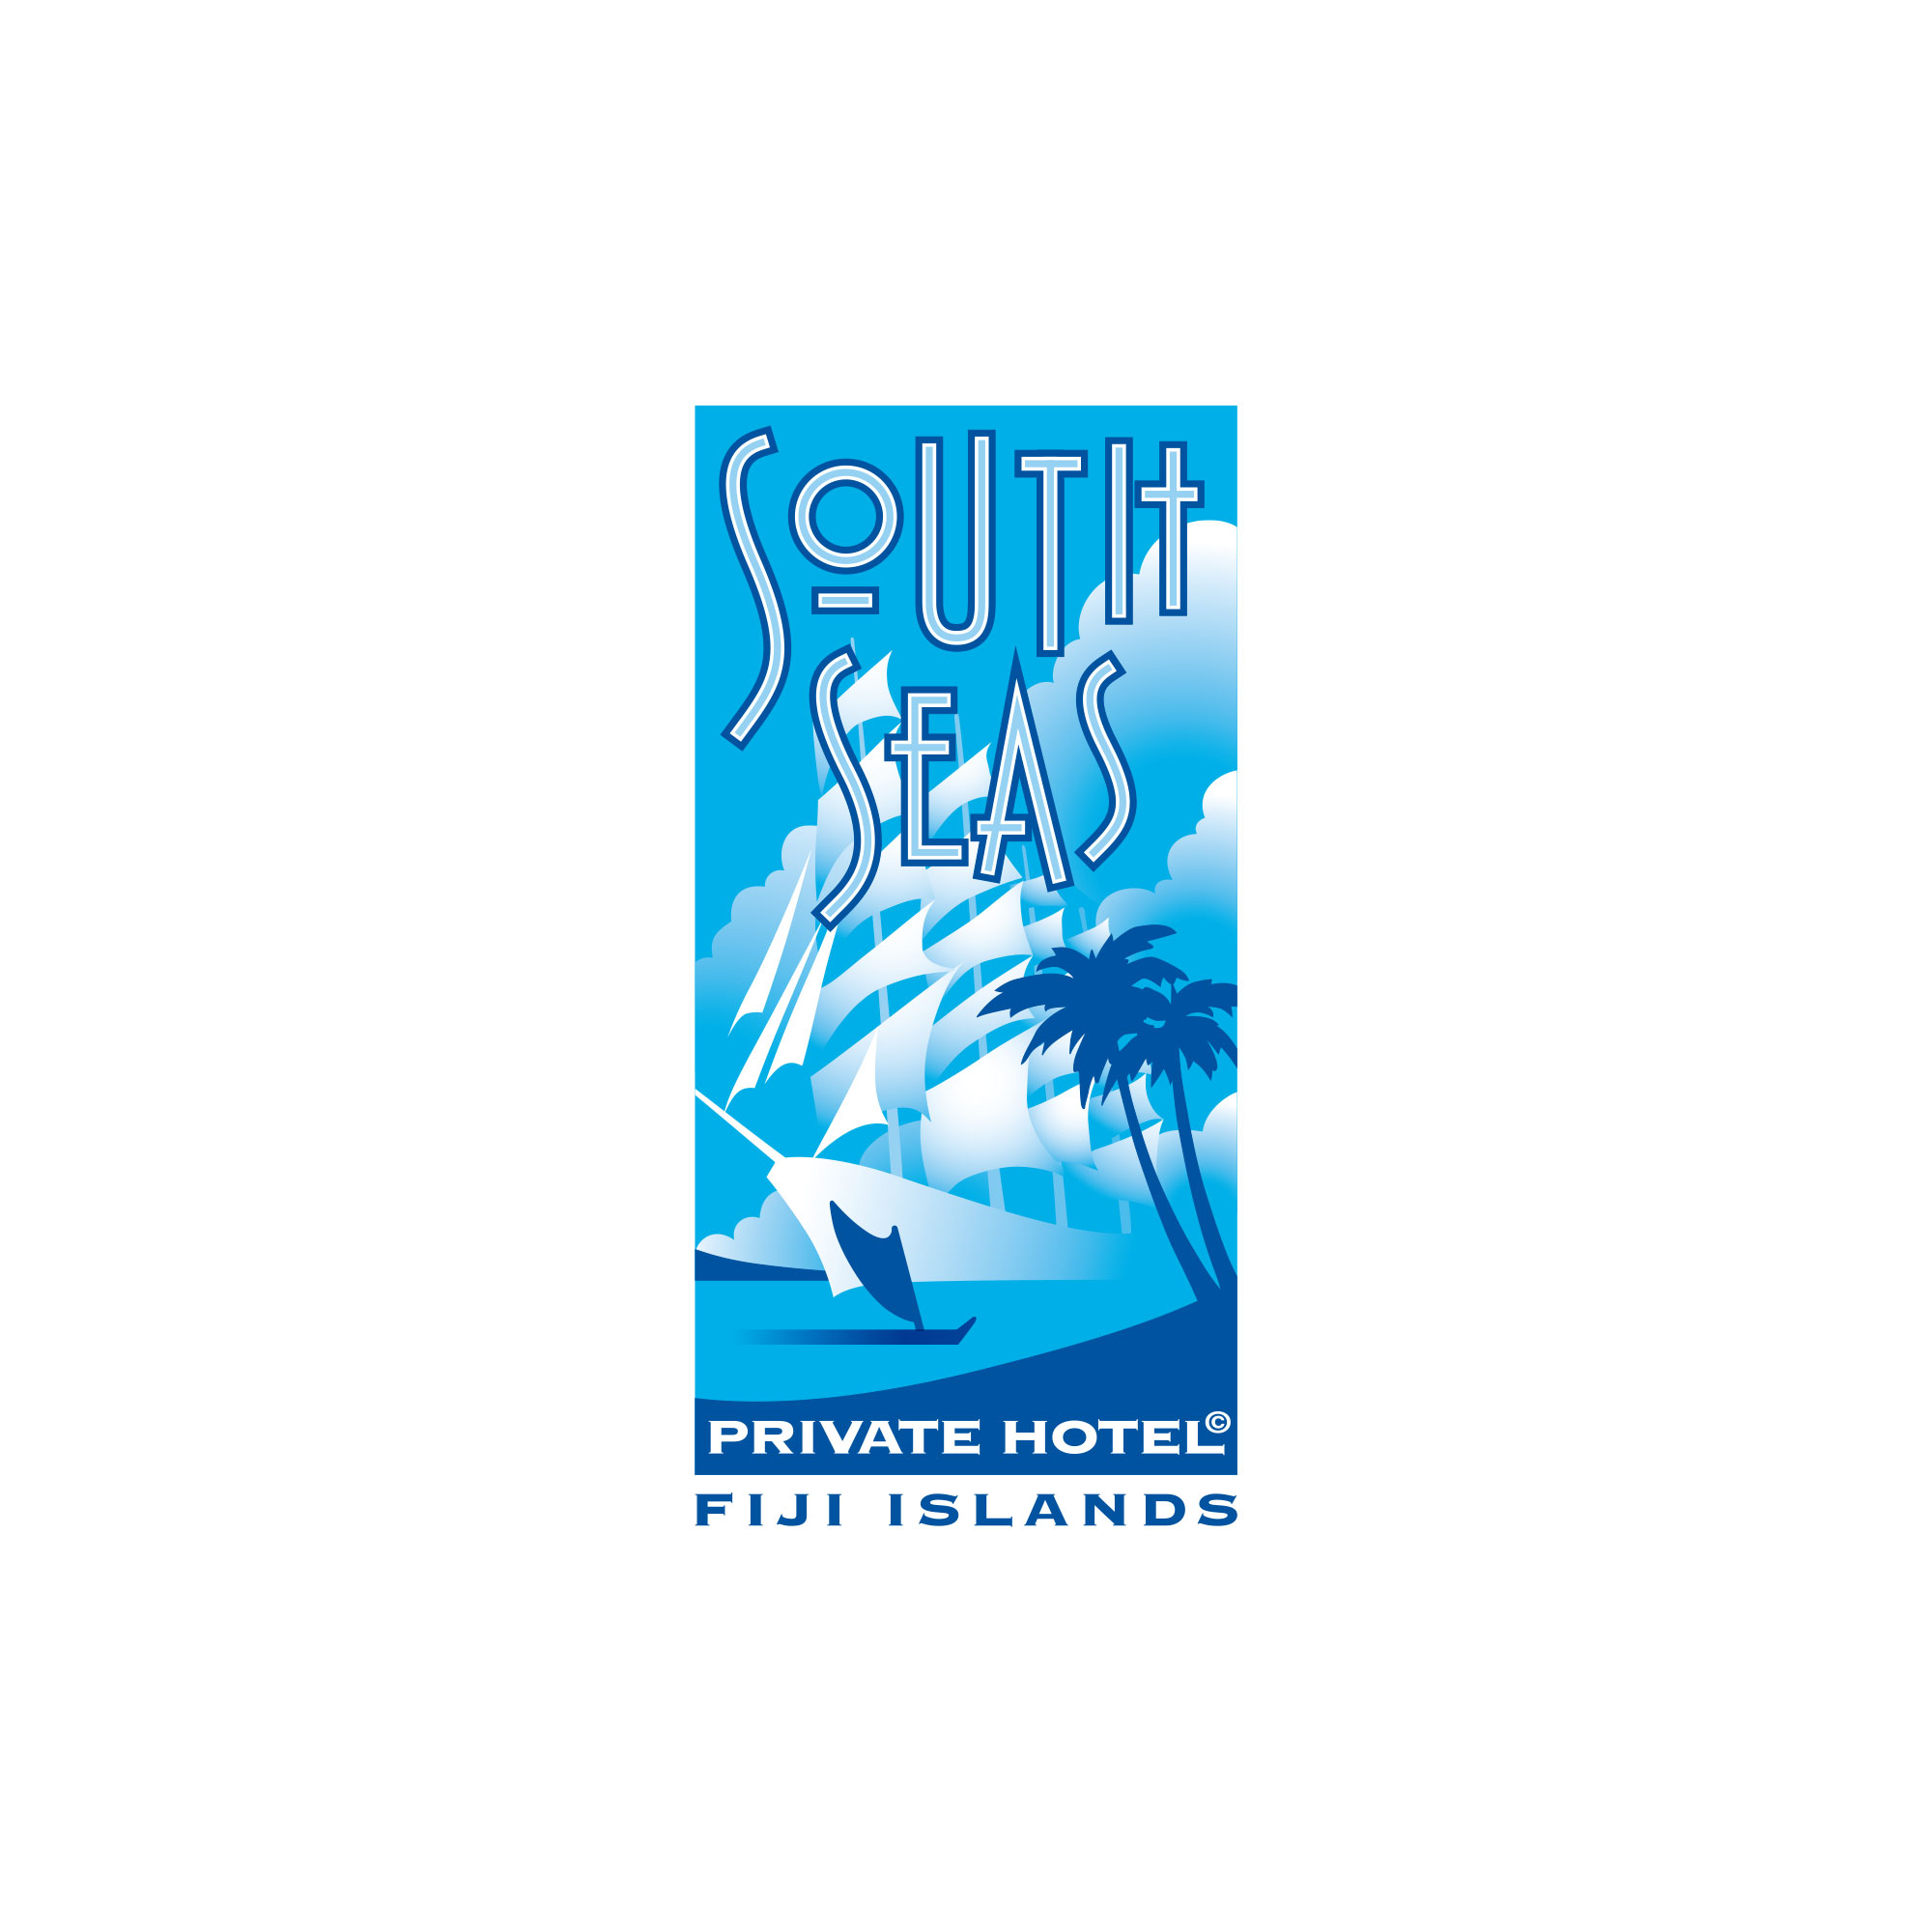 South Seas Hotel Logomark